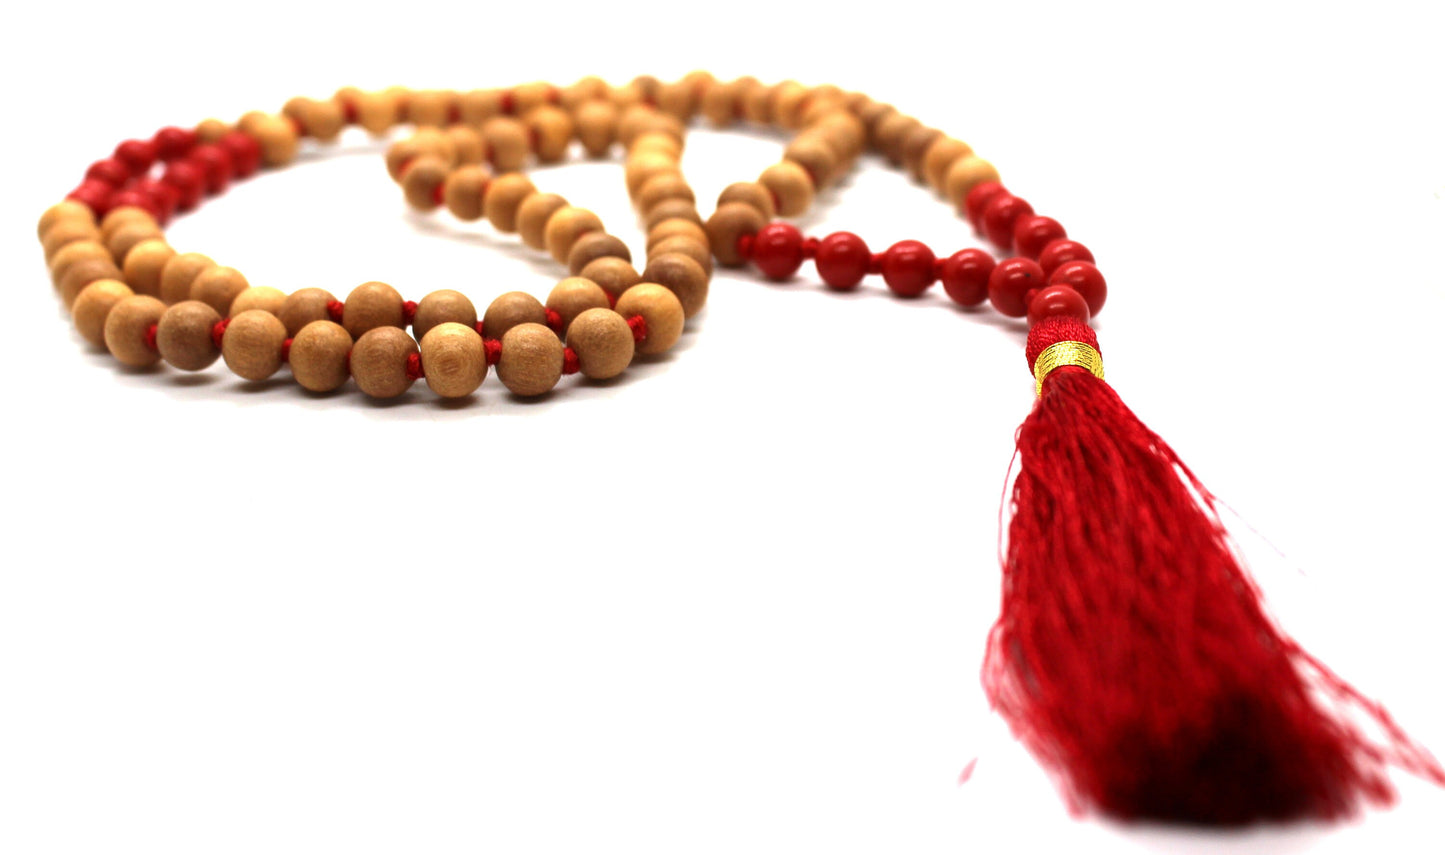 Sandalwood mala 6mm, 108 beads rosary, sandalwood japa with Red Coral mala necklace, hindu meditation buddhist tibetan prayer beads Premium